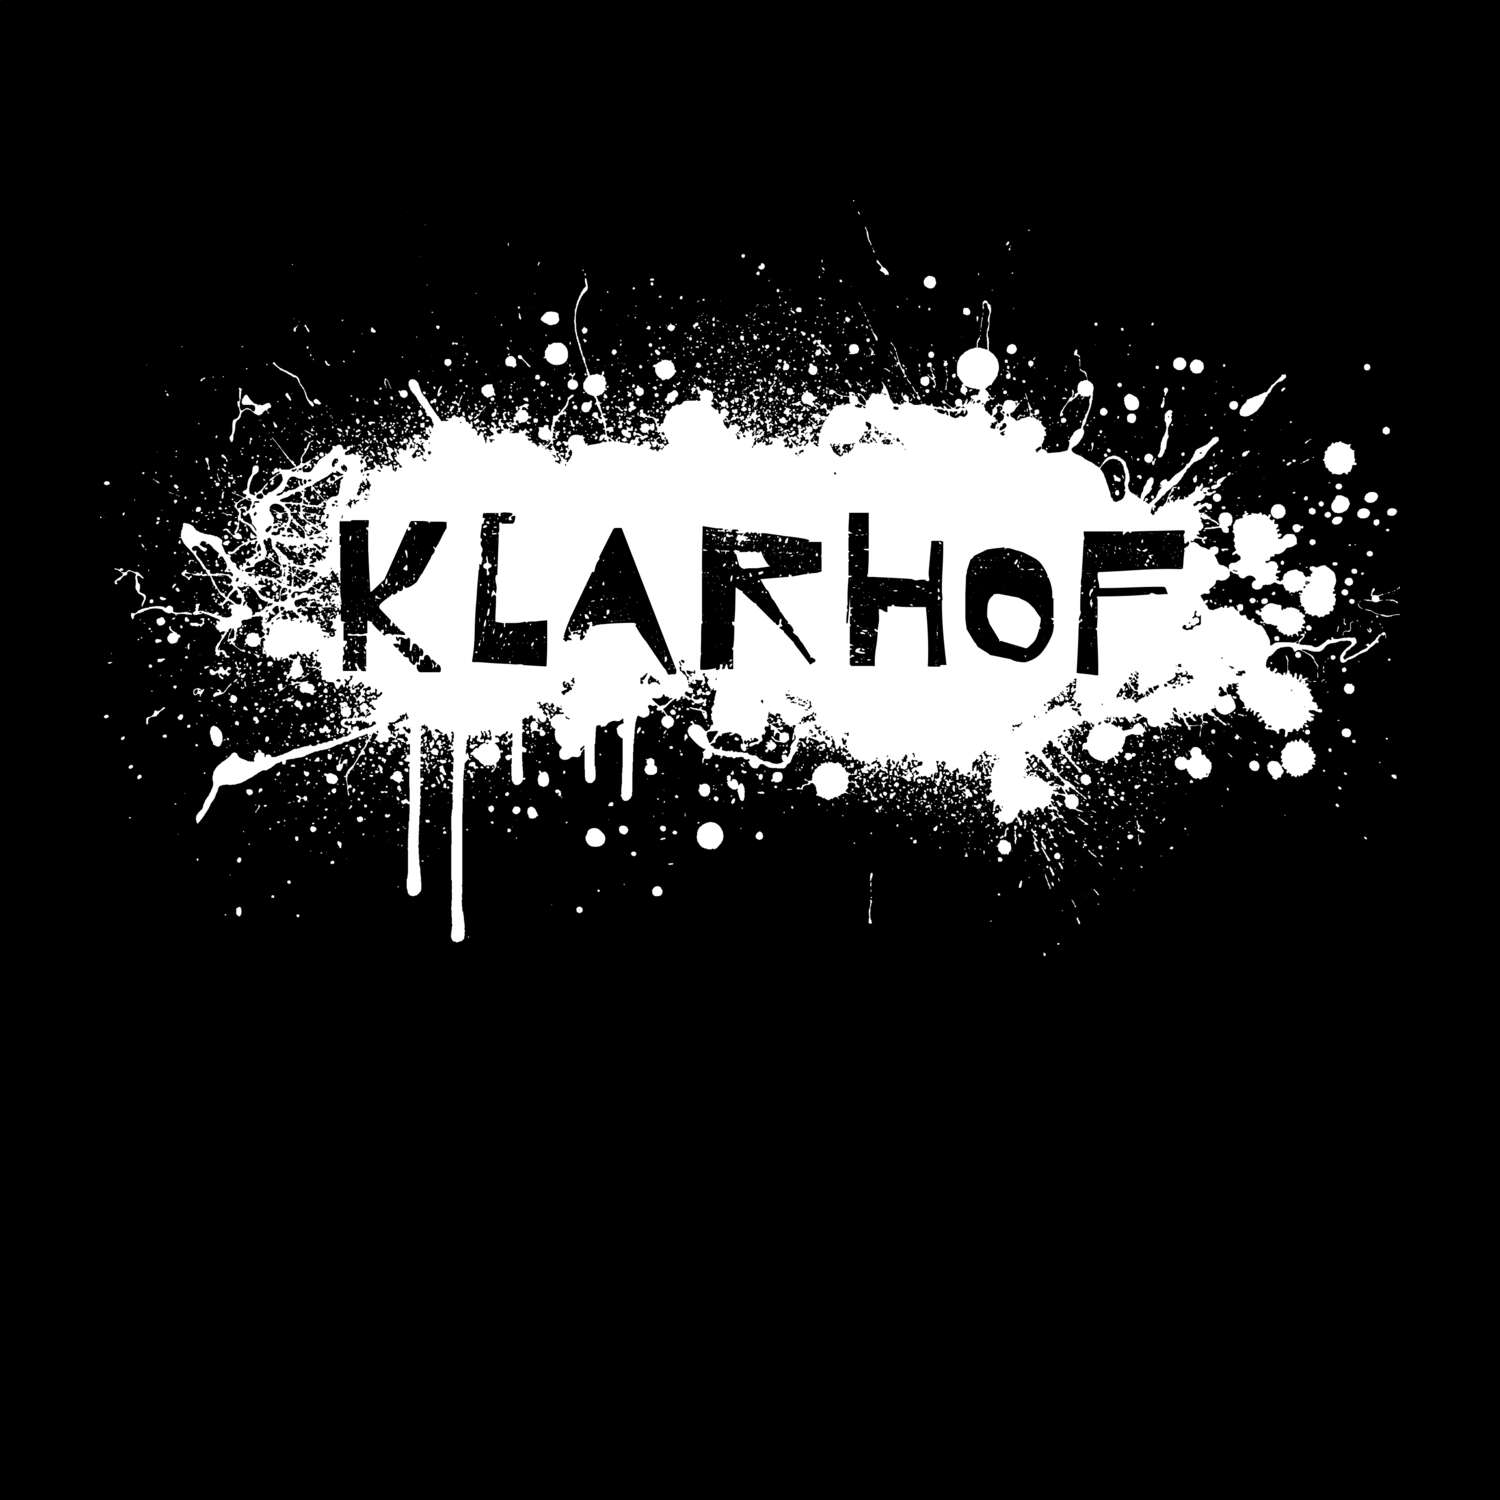 Klarhof T-Shirt »Paint Splash Punk«